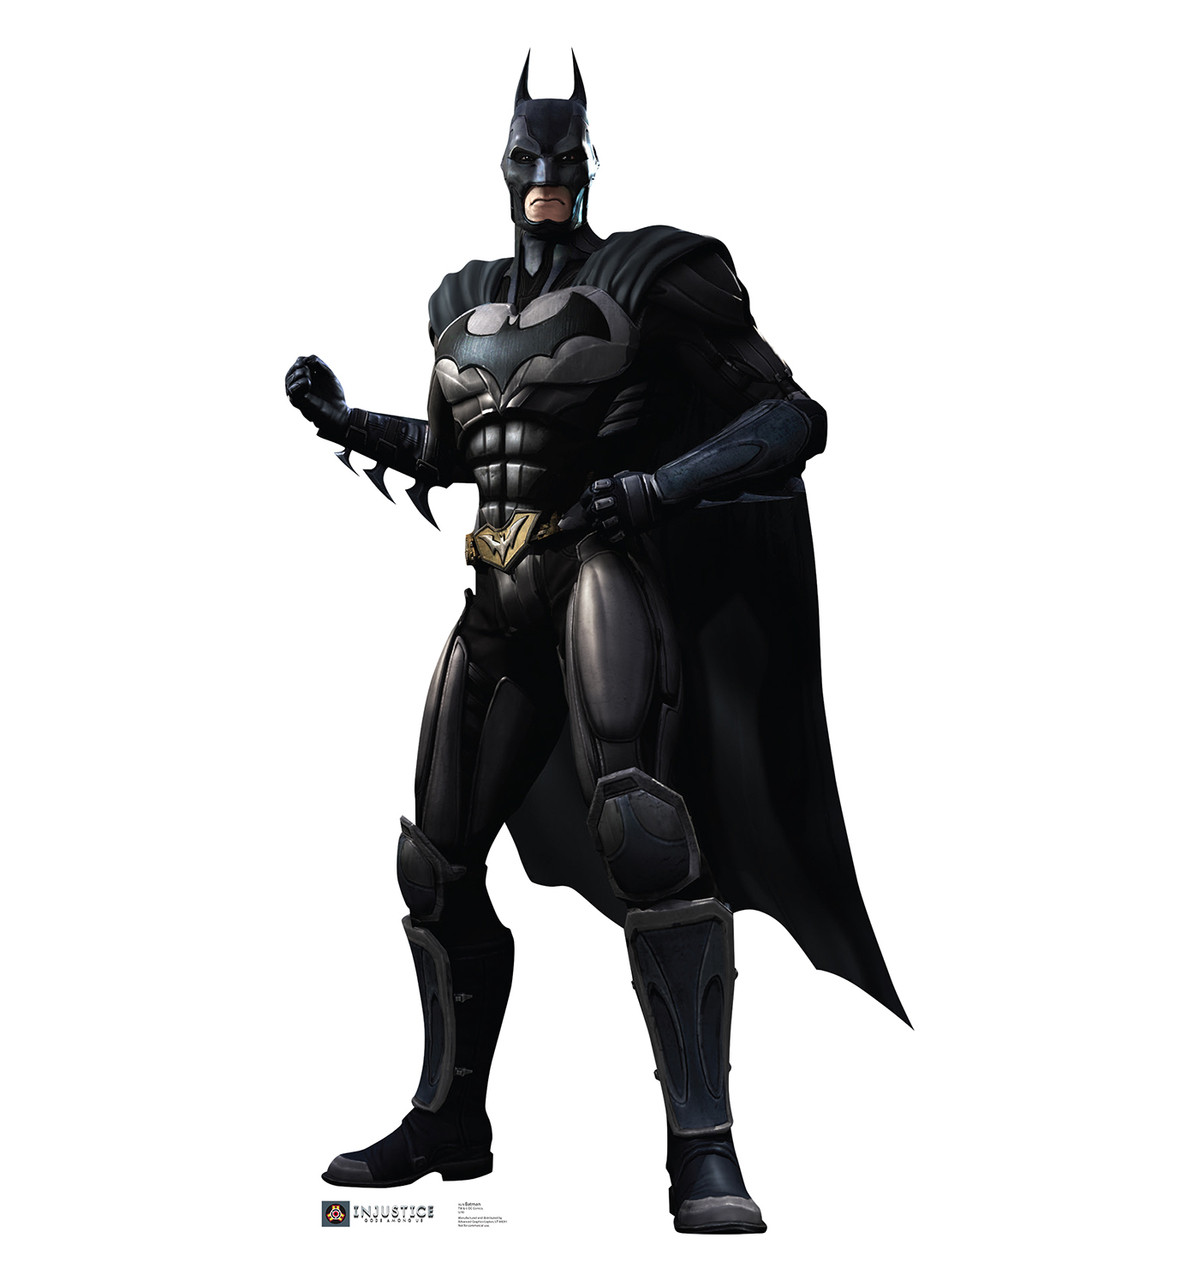 Life-size Batman - Injustice Gods Among Us Cardboard Standup